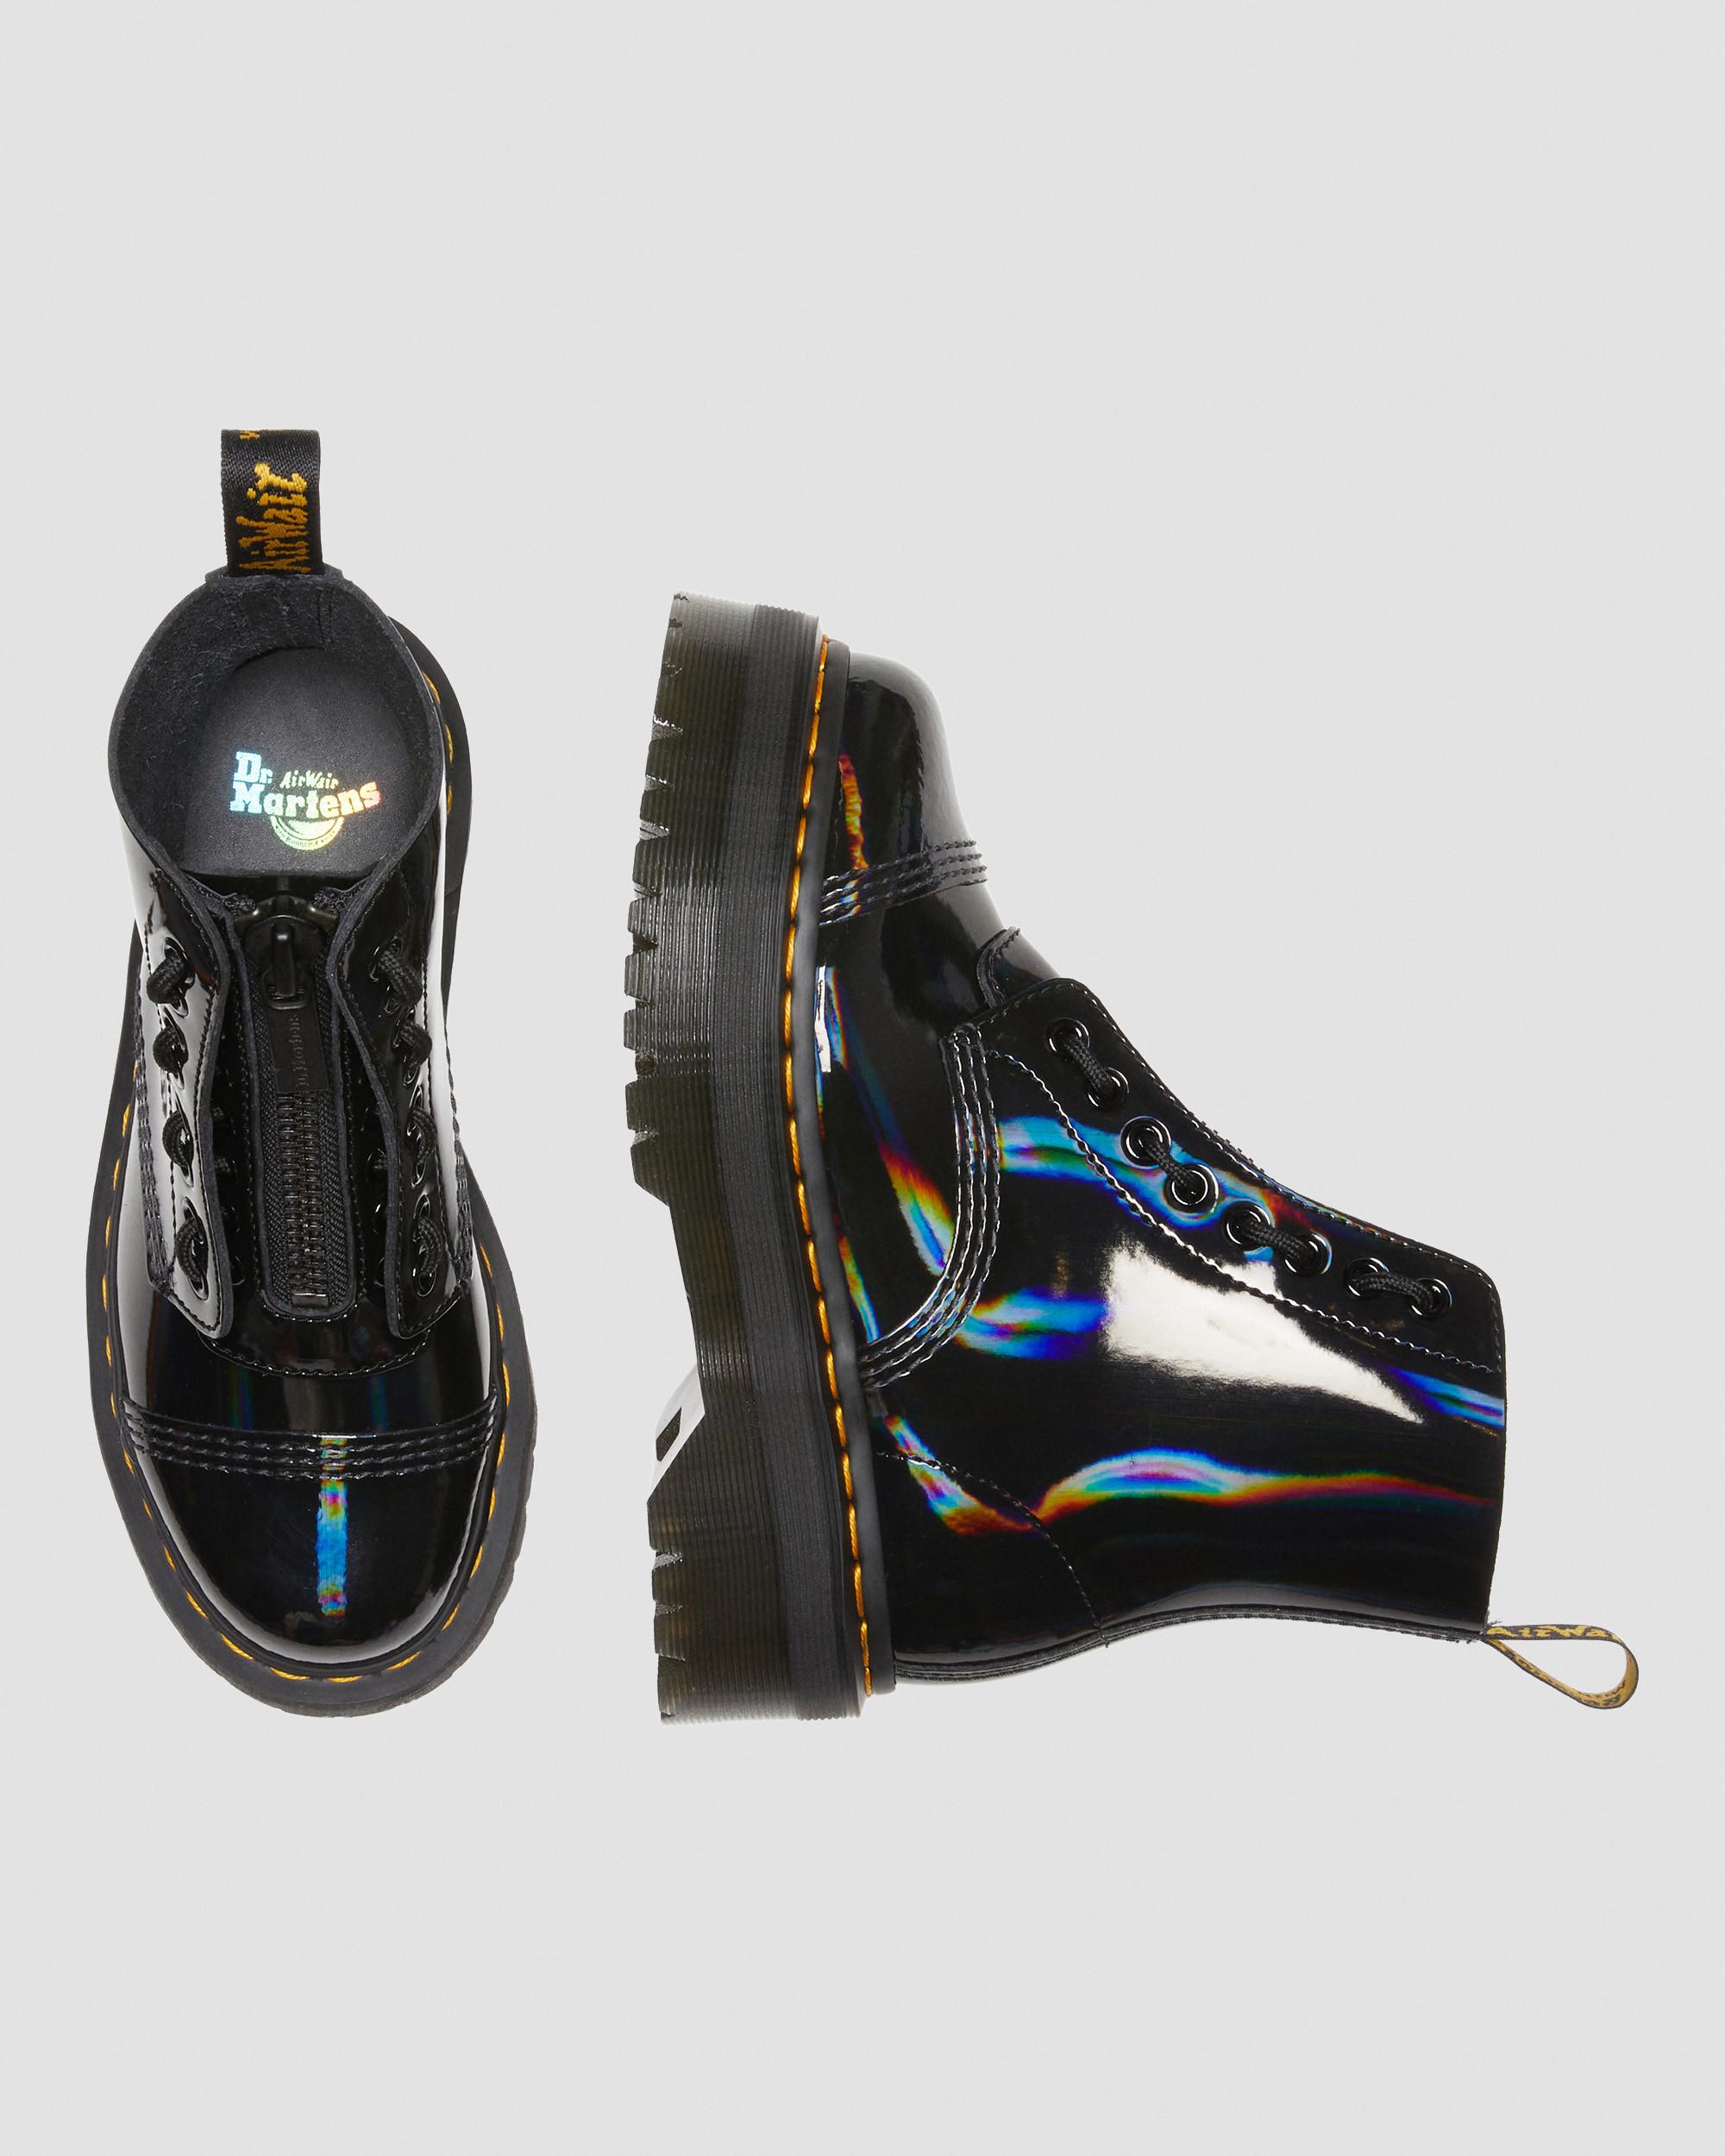 Sinclair Rainbow Leather Platform Boots